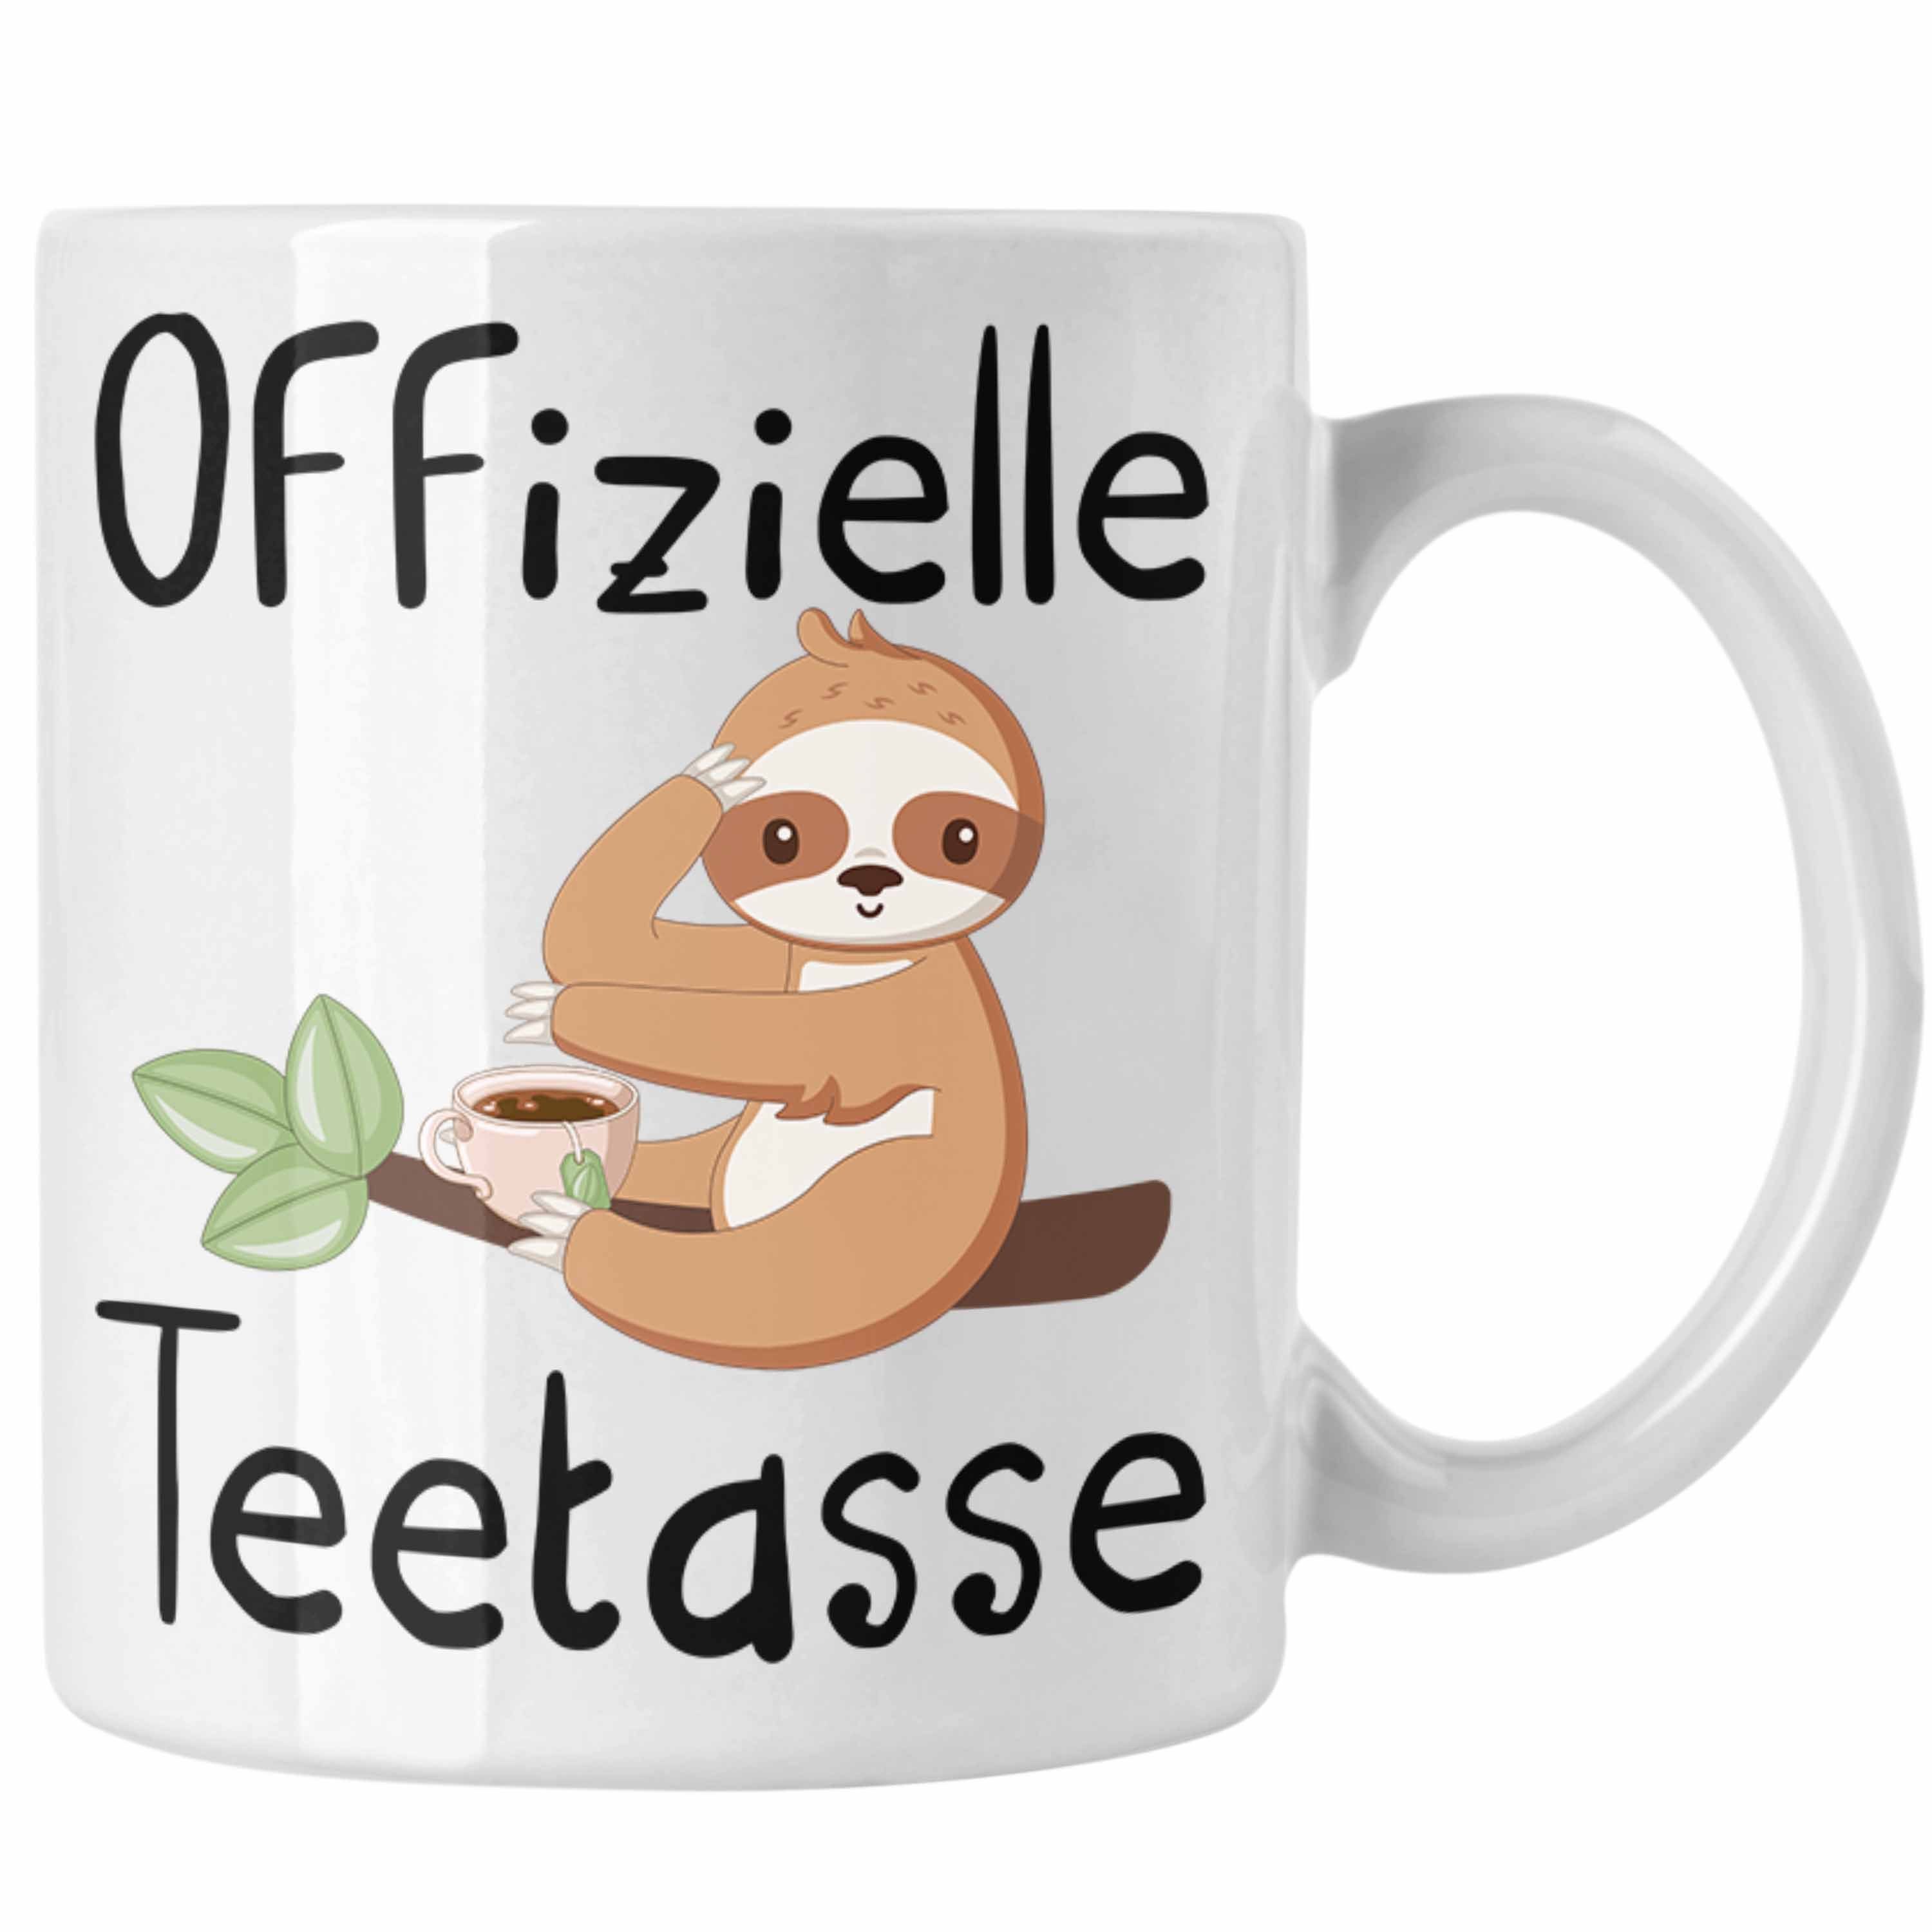 Trendation Tasse Offizielle Teetasse Geschenk Teetrinker Geschenkidee Tee-Tasse Weiss